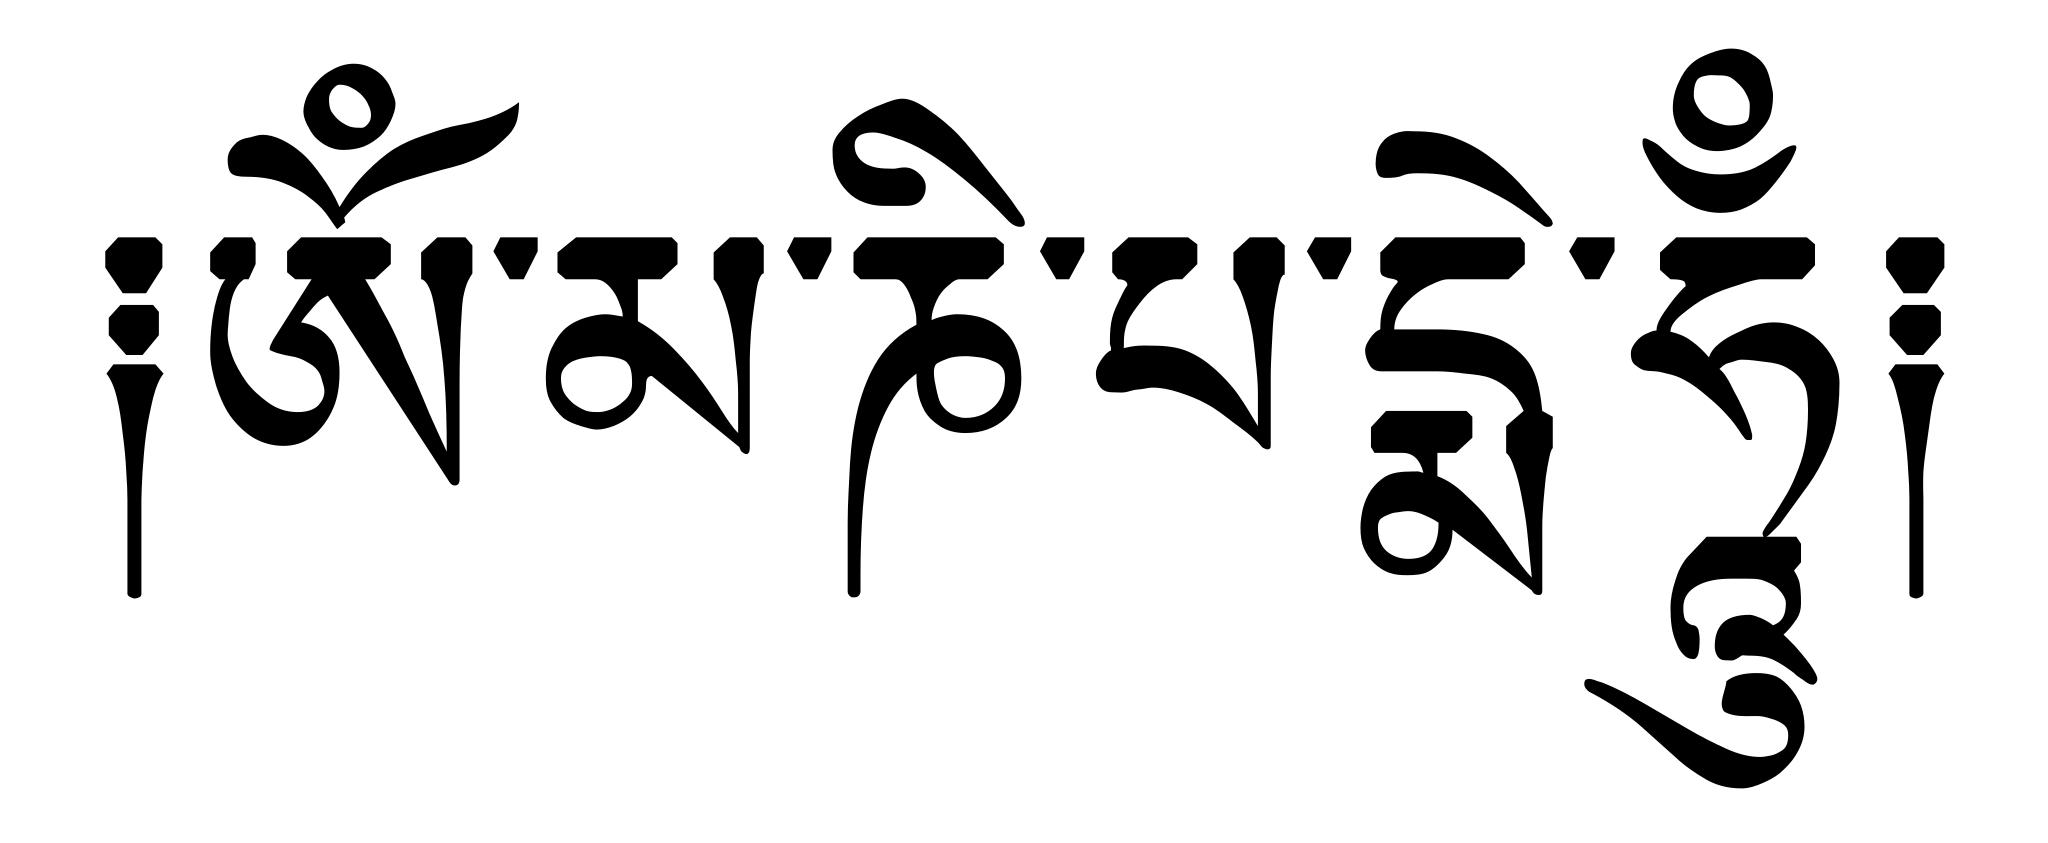 Ом мани Падме Хум на тибетском надпись